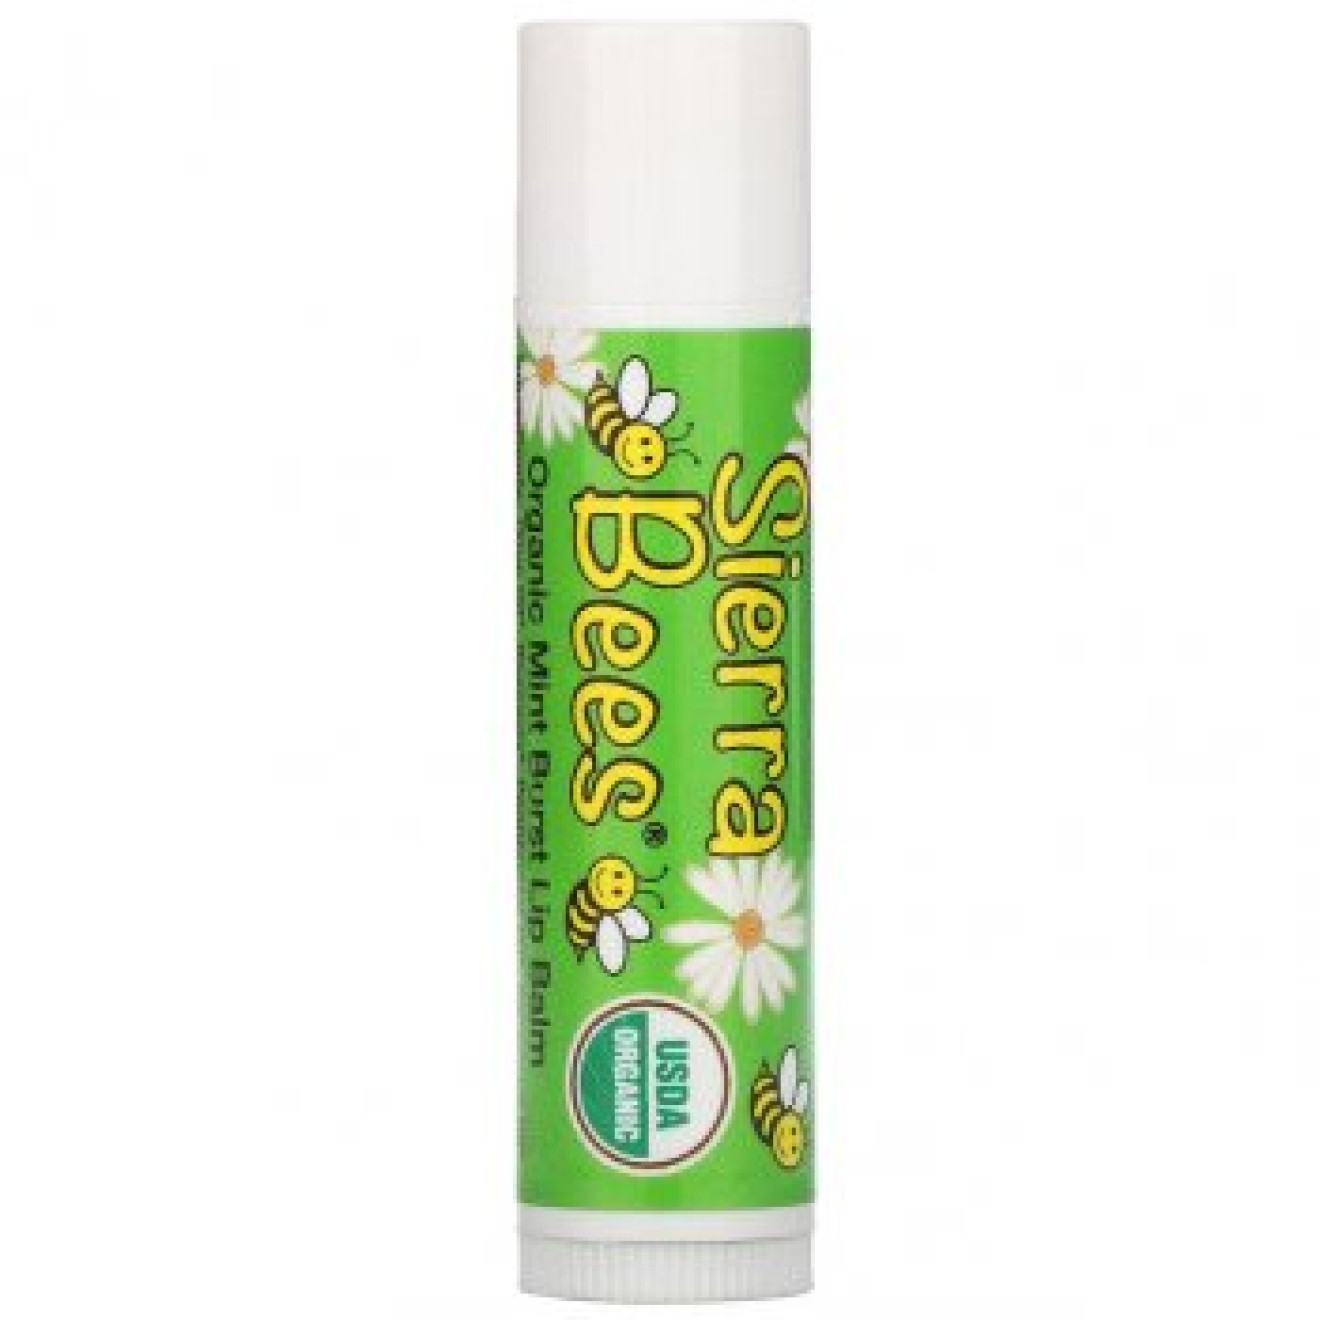 Бальзам для губ Sierra Bees, Organic Lip Balms, Mint Burst- Органический бальзам для губ, мятный взрыв